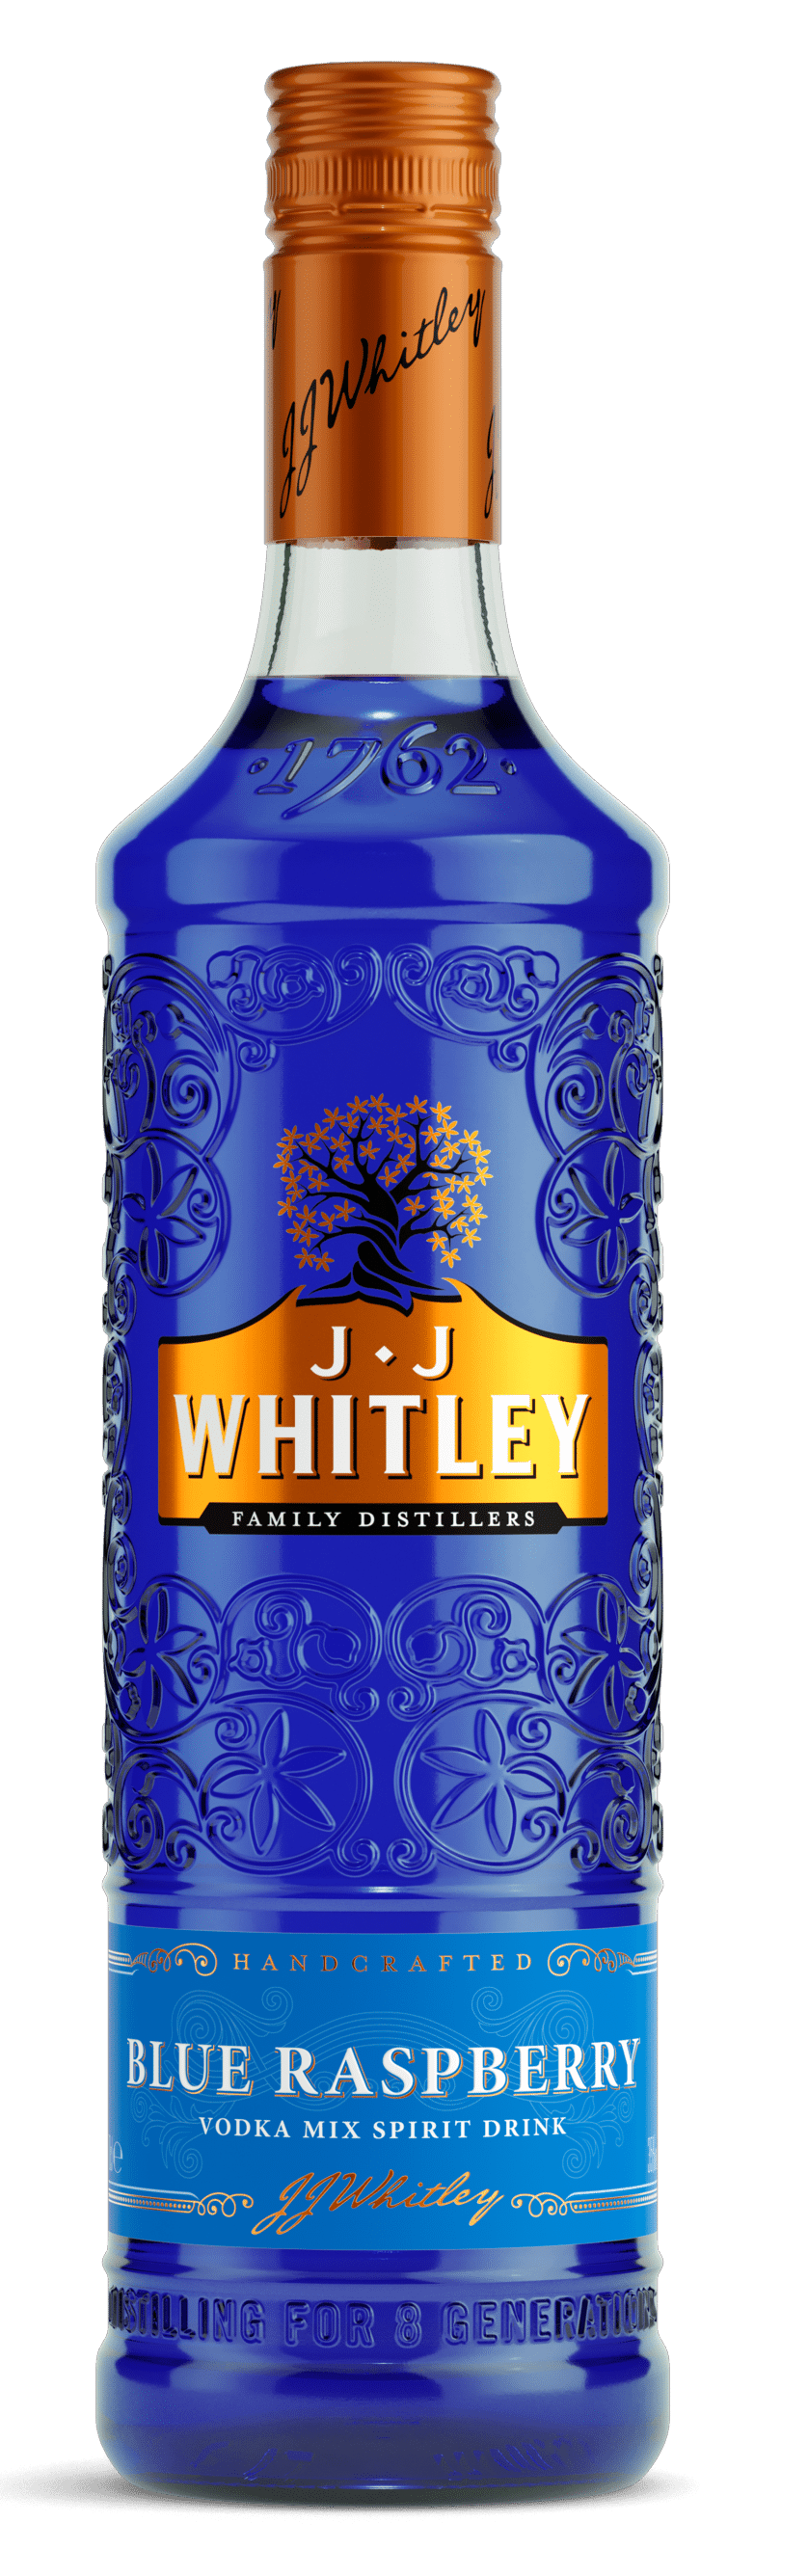 J.J WHITLEY BLUE RASPBERRY VODKA 38% 70CL